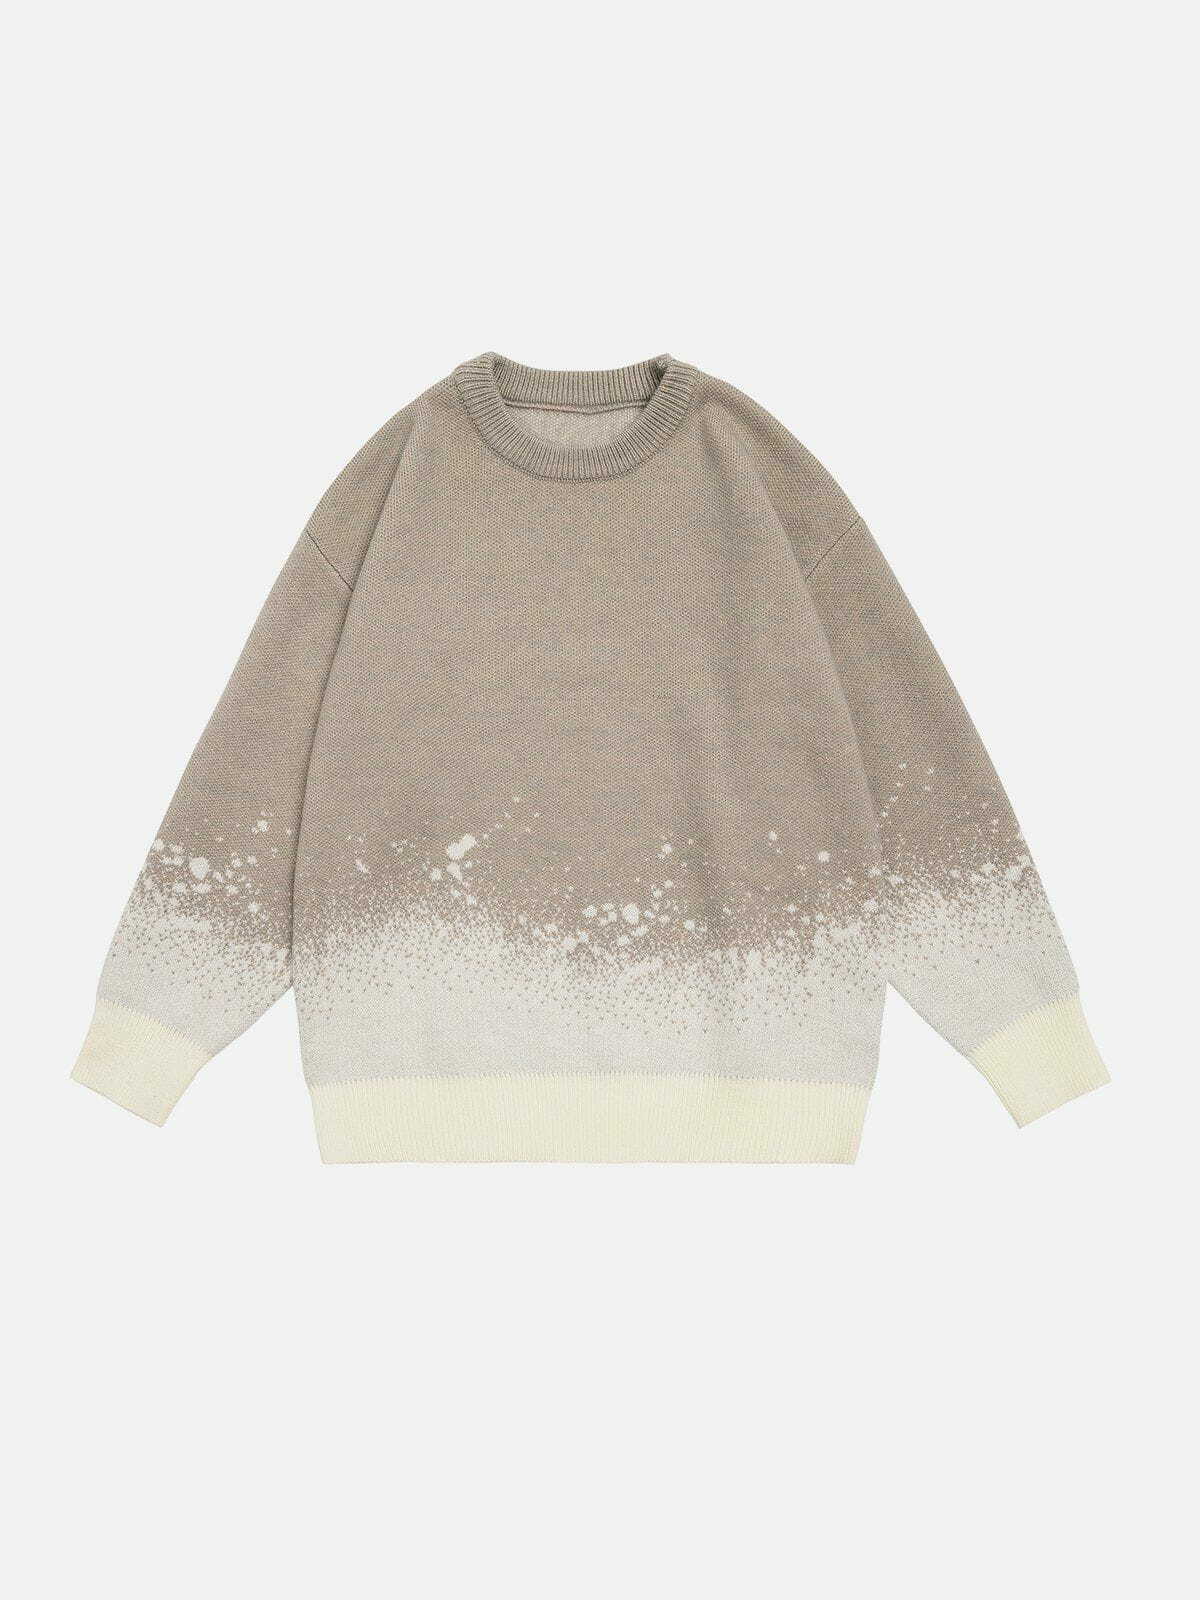 starry night gradient sweater edgy urban gradient knit 3374